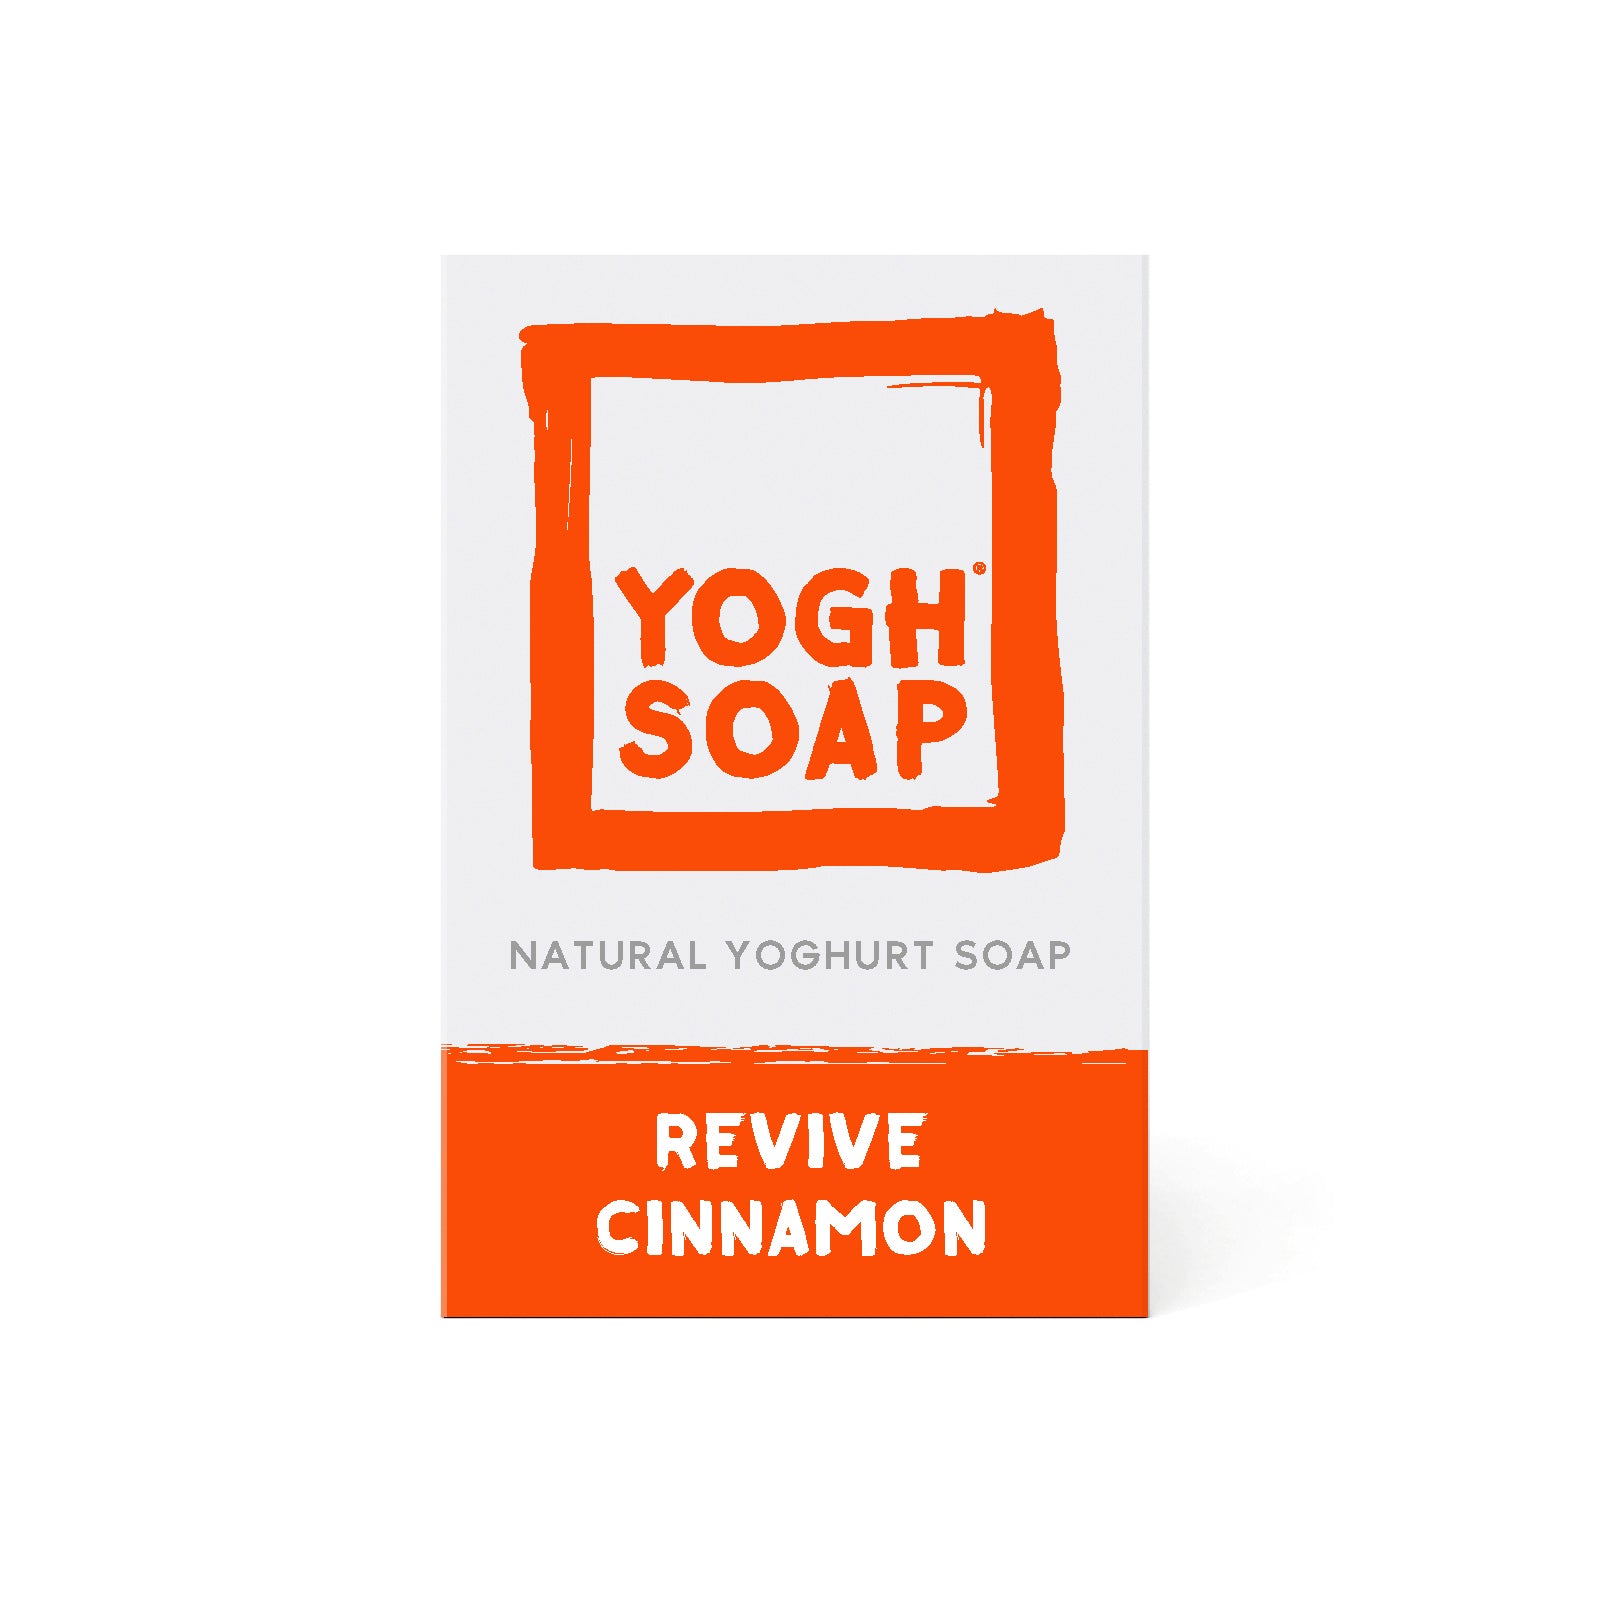 YOGHSOAP® Revive Cinnamon, 100g.